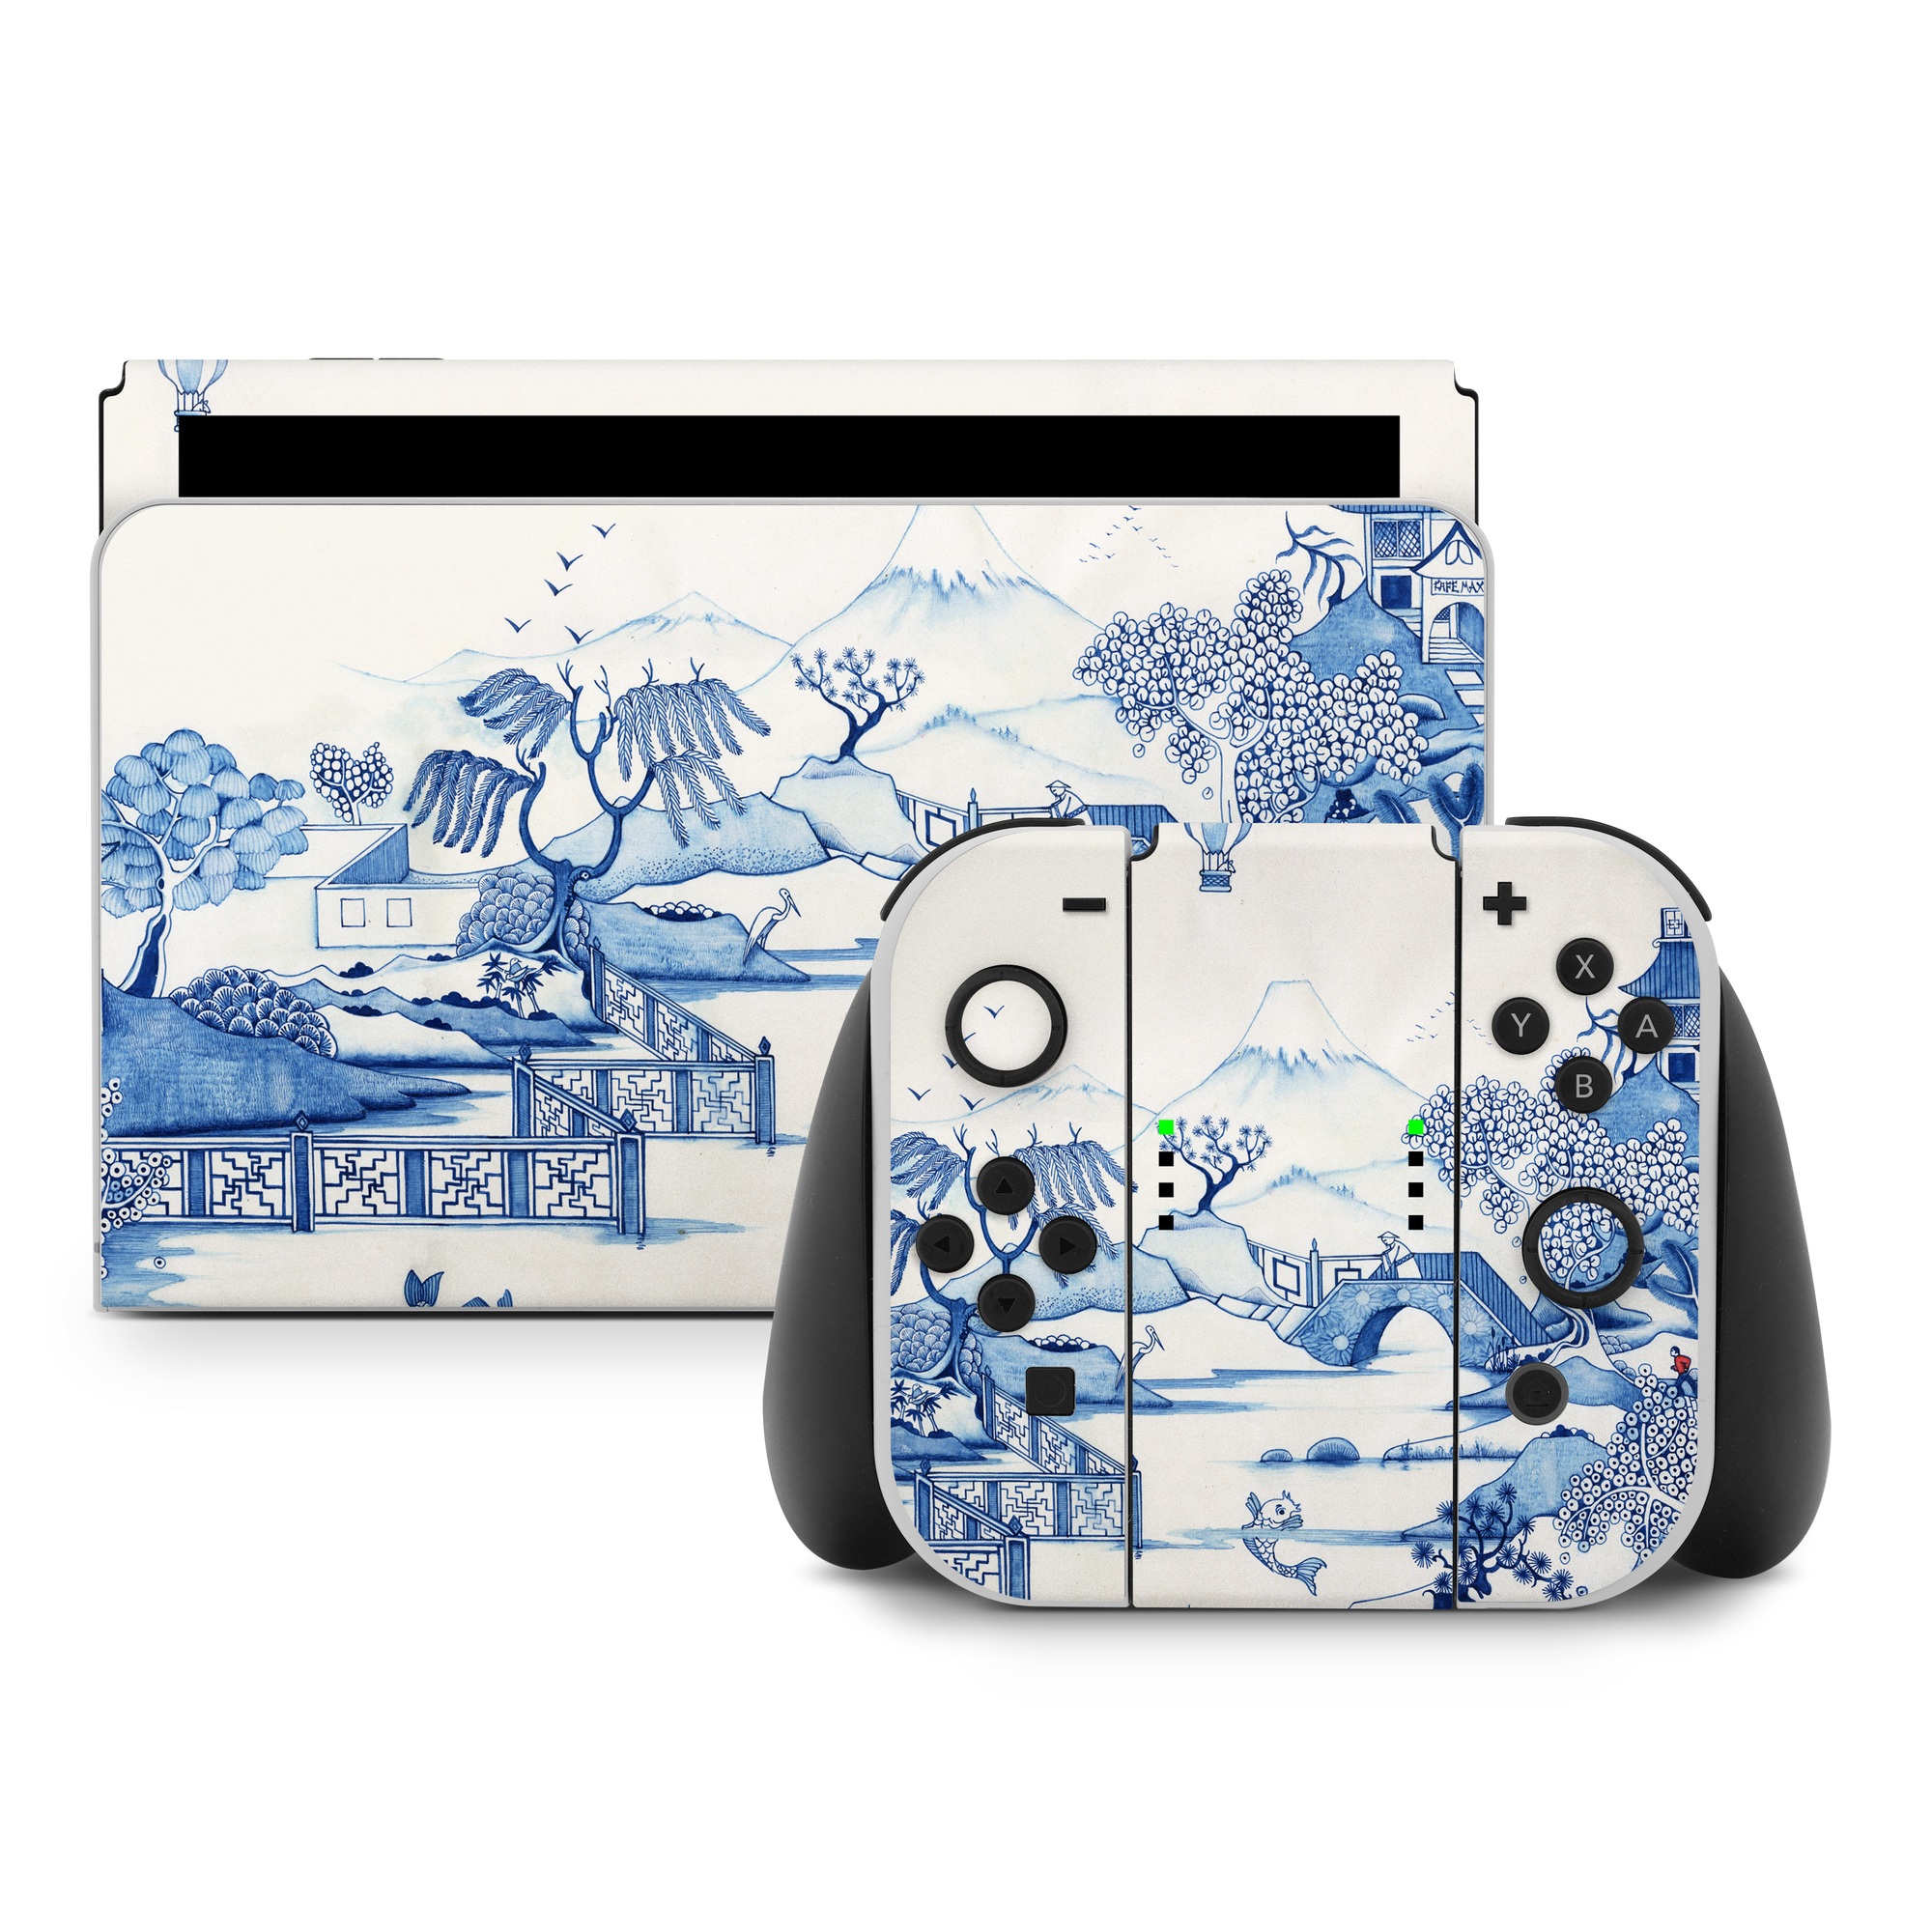 Nintendo Switch Skin - Blue Willow (Image 1)